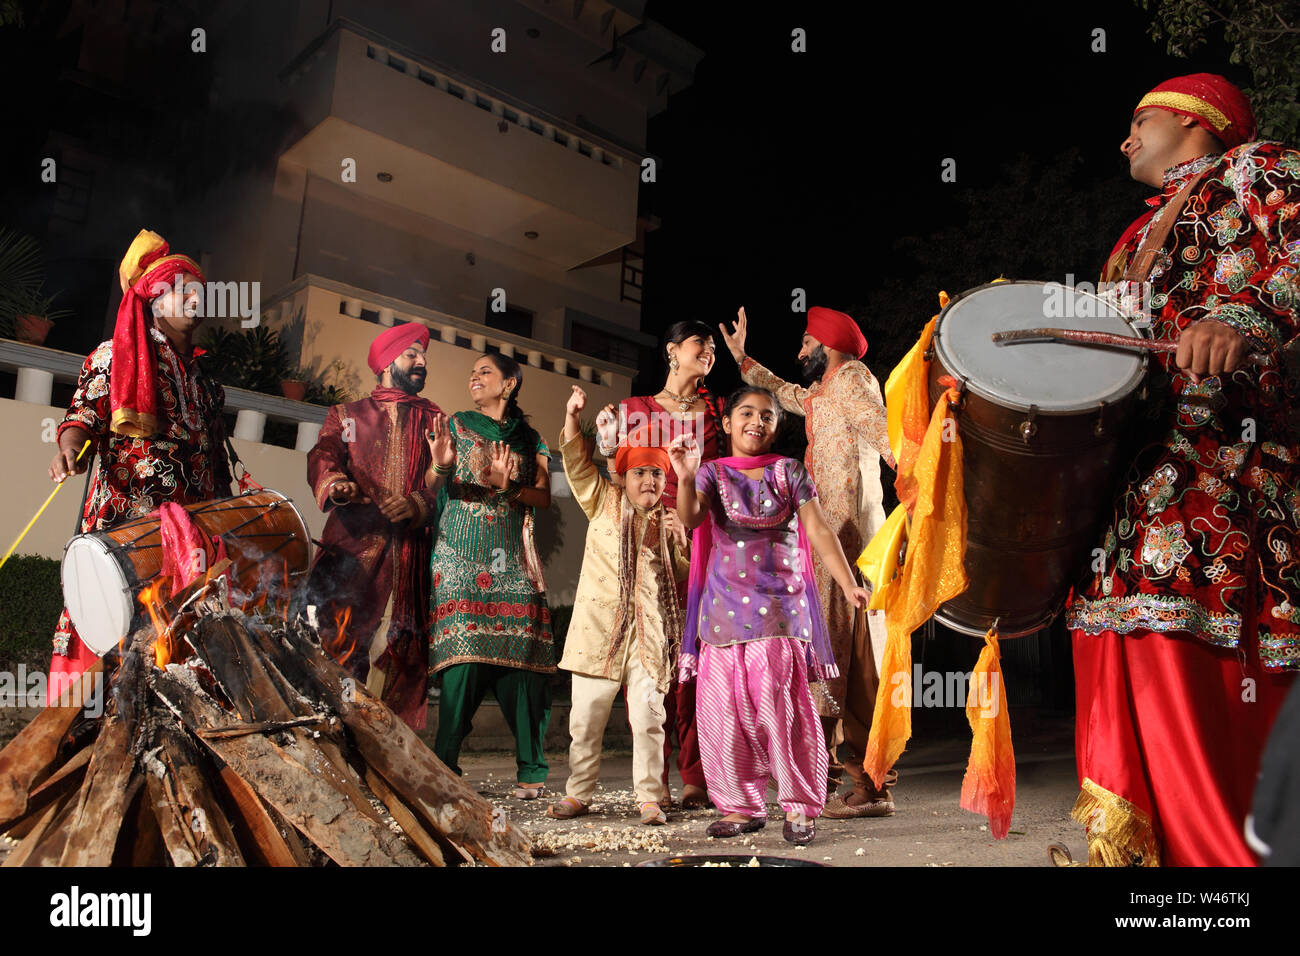 Family celebrating Lohri festival, Punjab, India Stock Photo